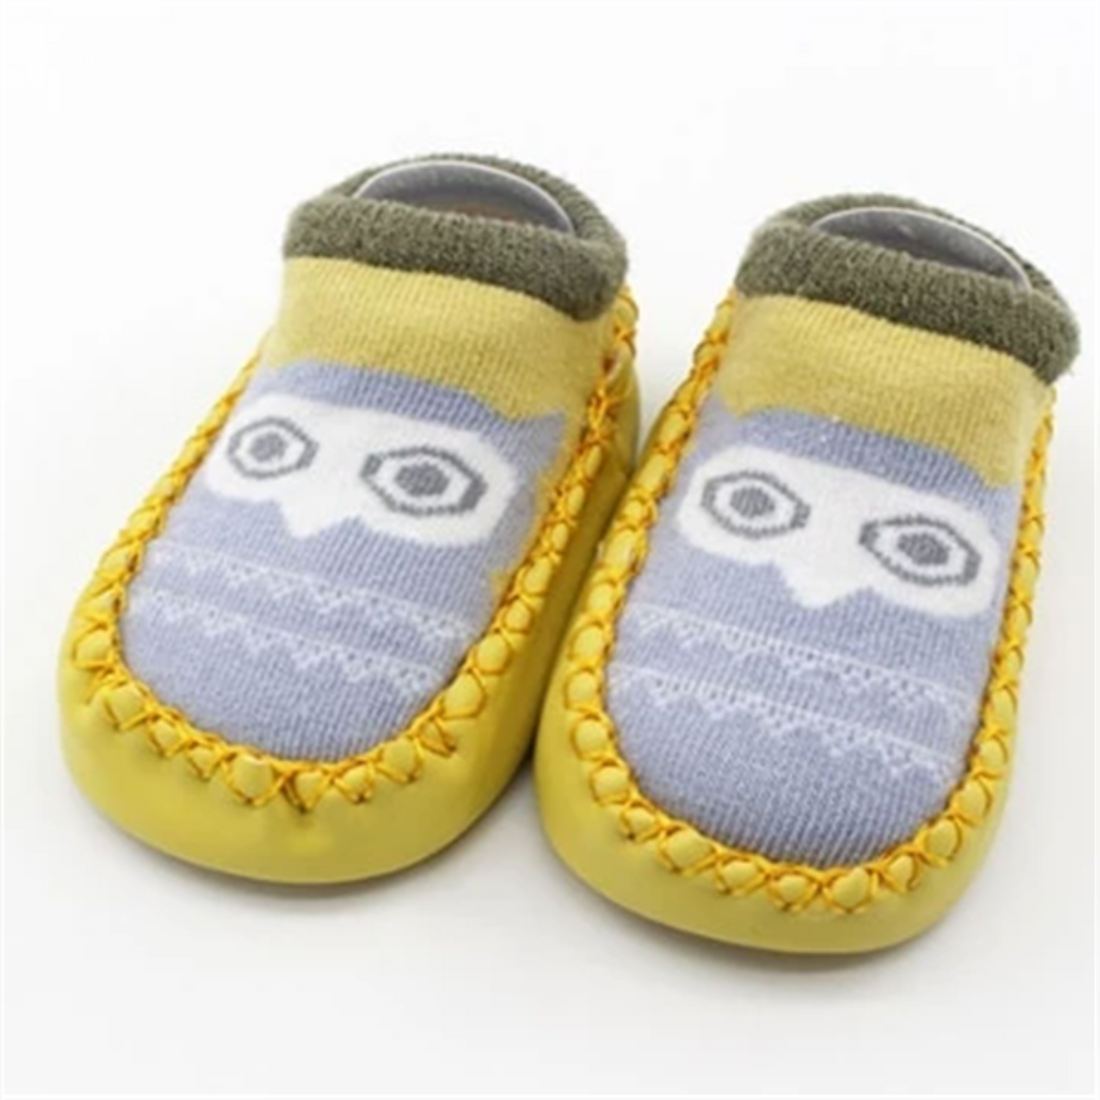 Soft baby floor socks in yellow